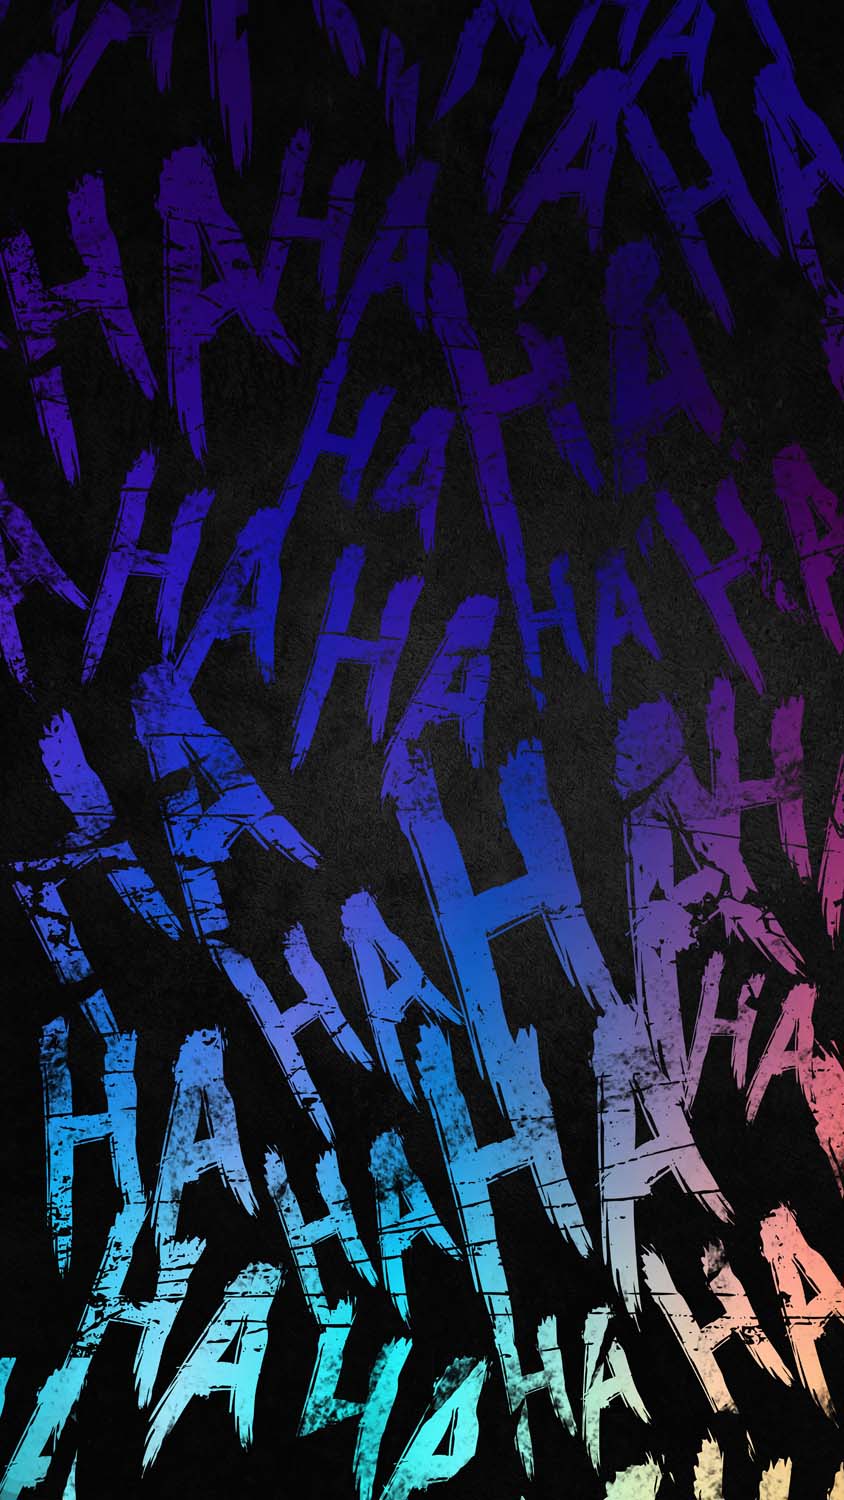 Joker Laugh IPhone Wallpaper HD - IPhone Wallpapers : iPhone Wallpapers